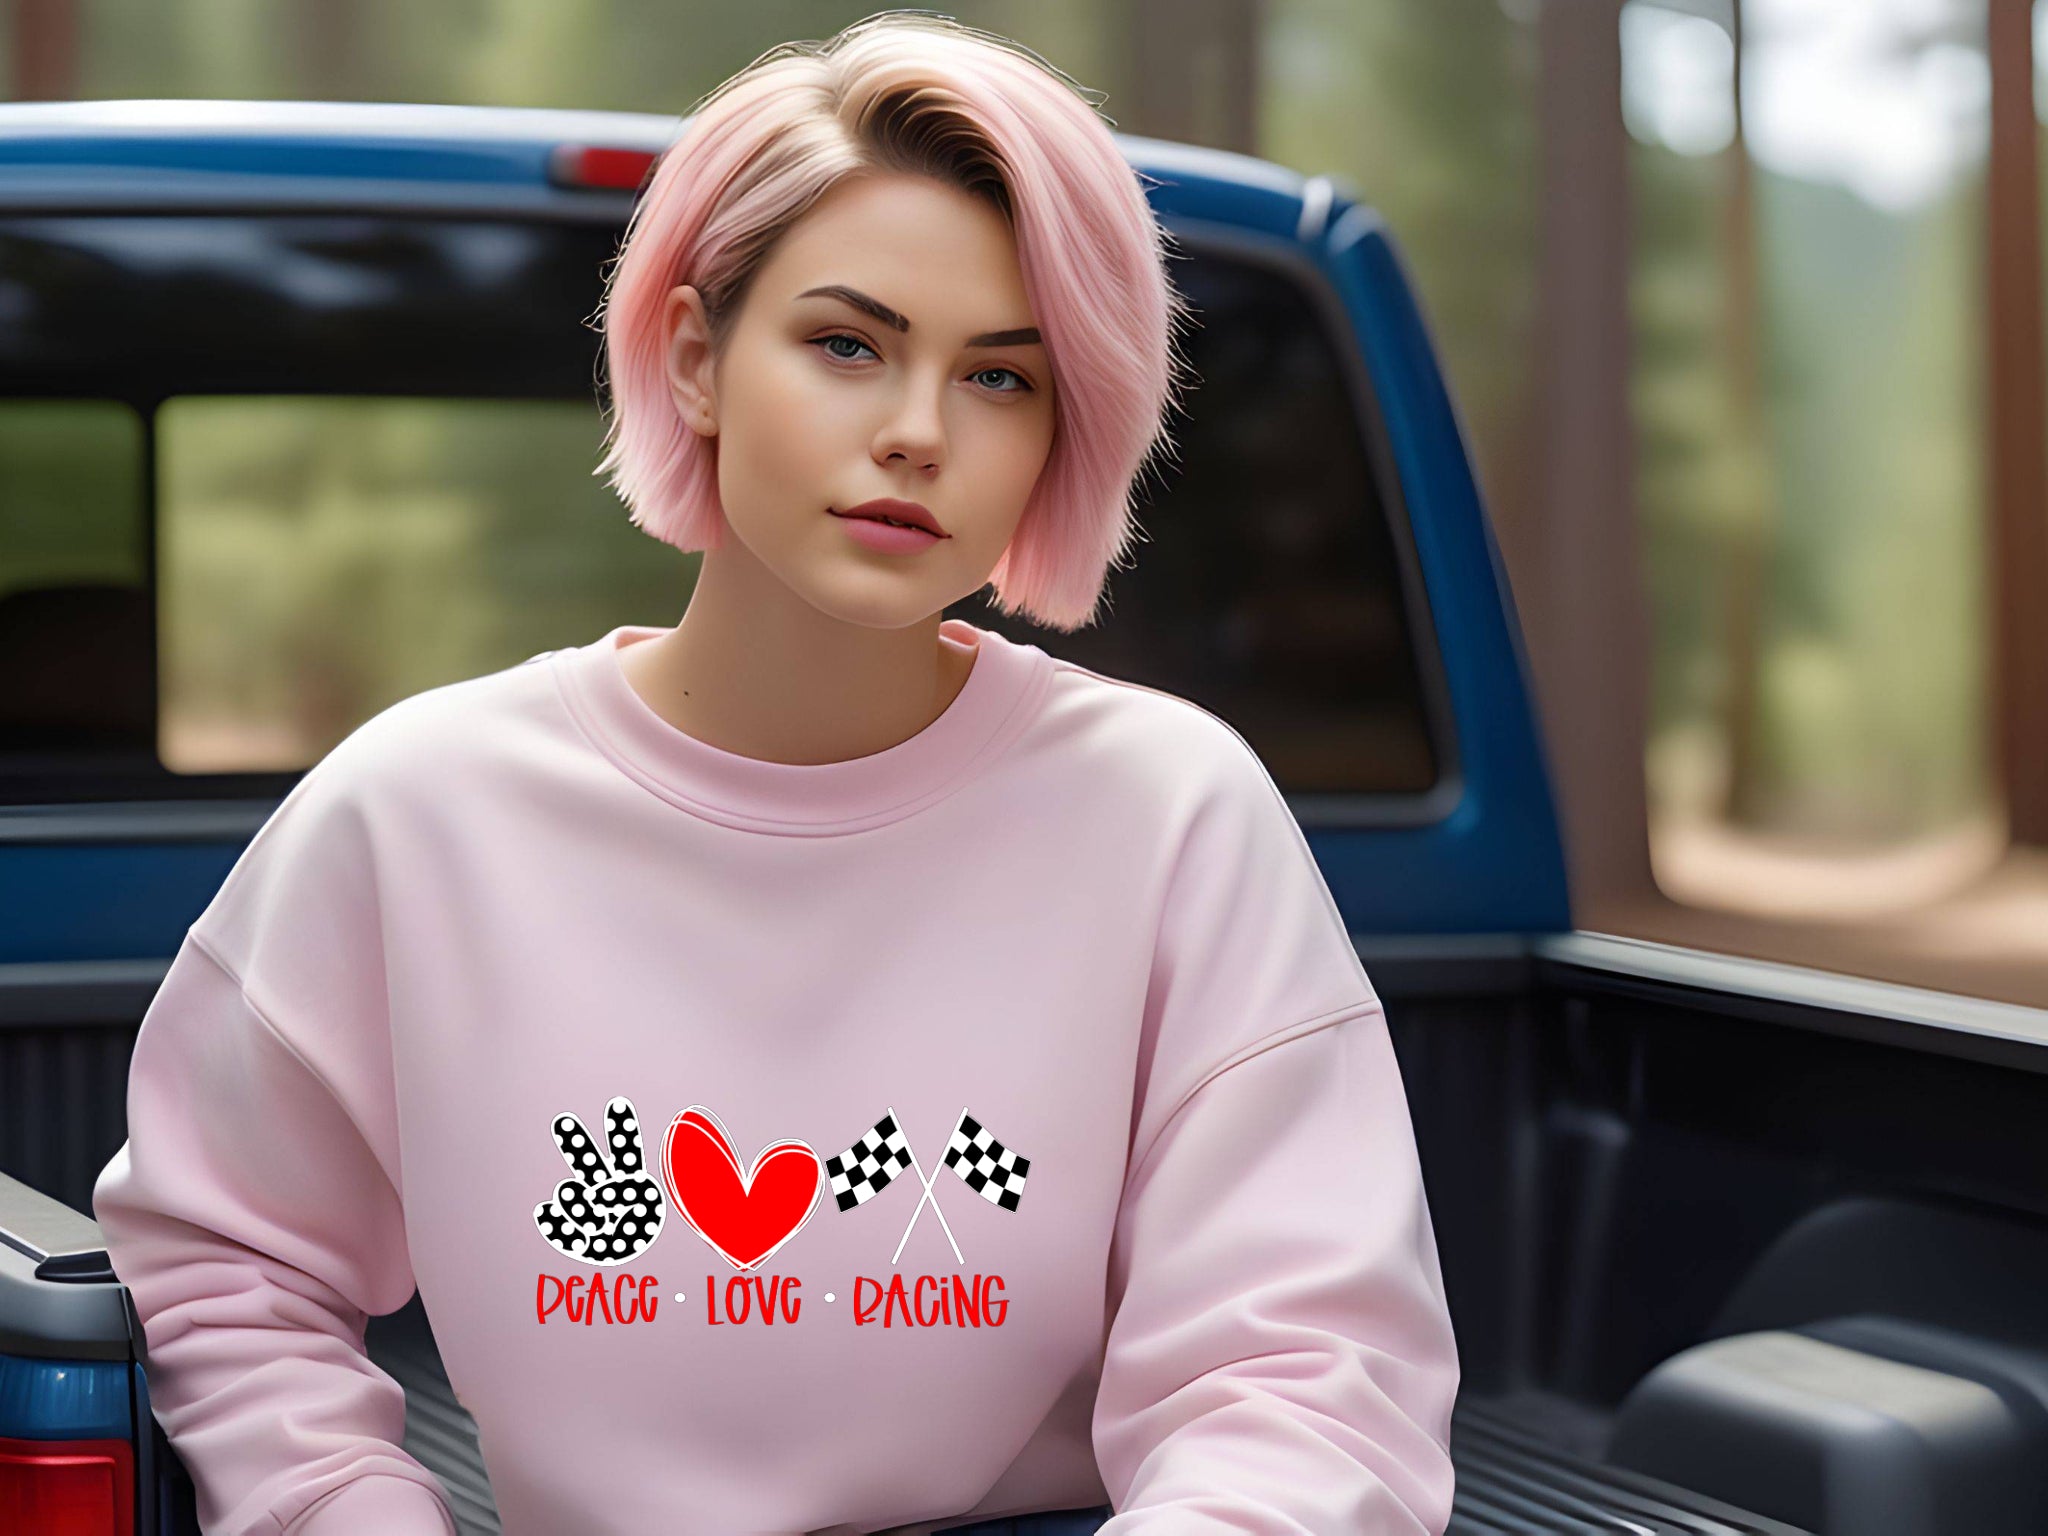 Racing - Peace Love Racing Graphic Print Women’s Sweatshirt